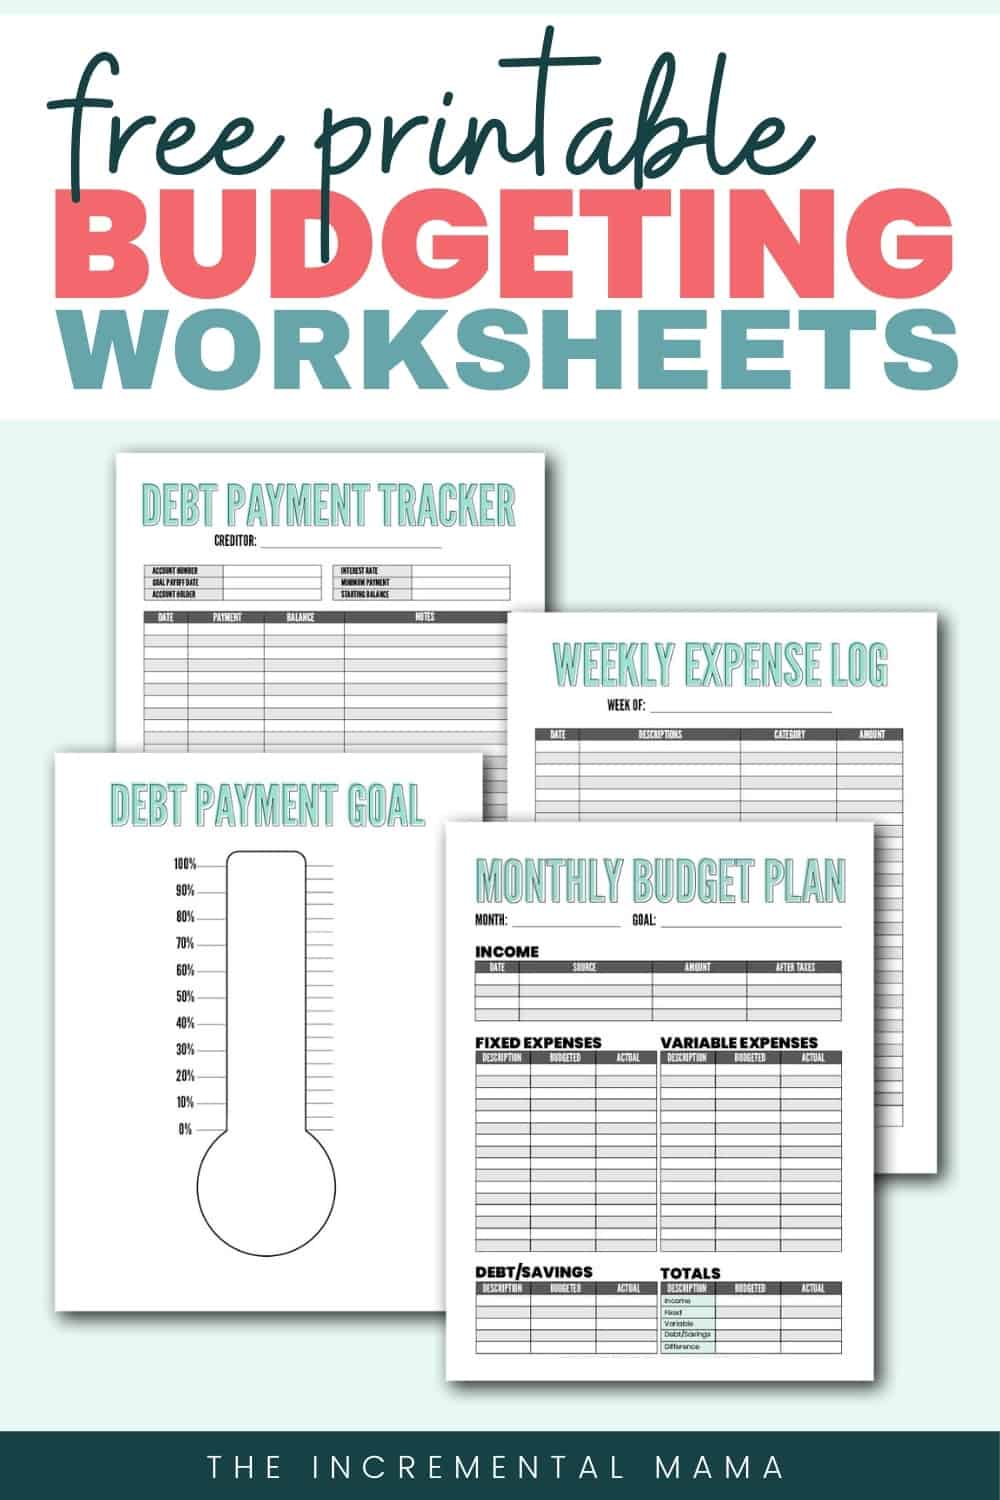 household budget worksheets printable